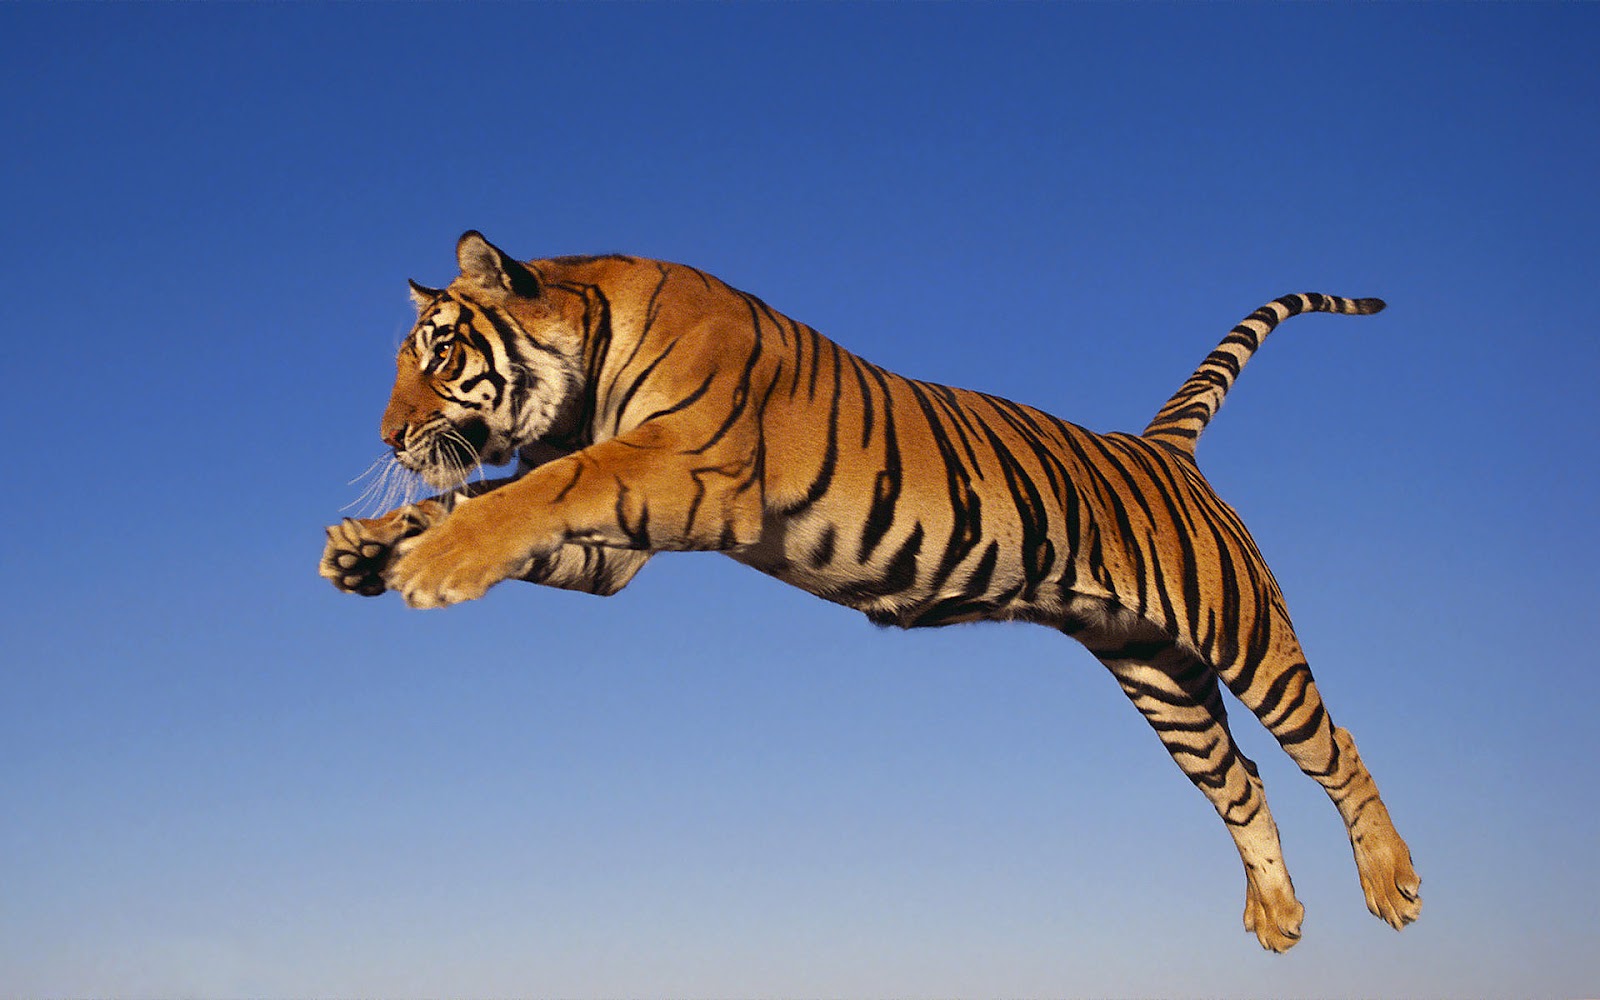 Animal Jumping And Attacking Tiger Tigers Wallpaper